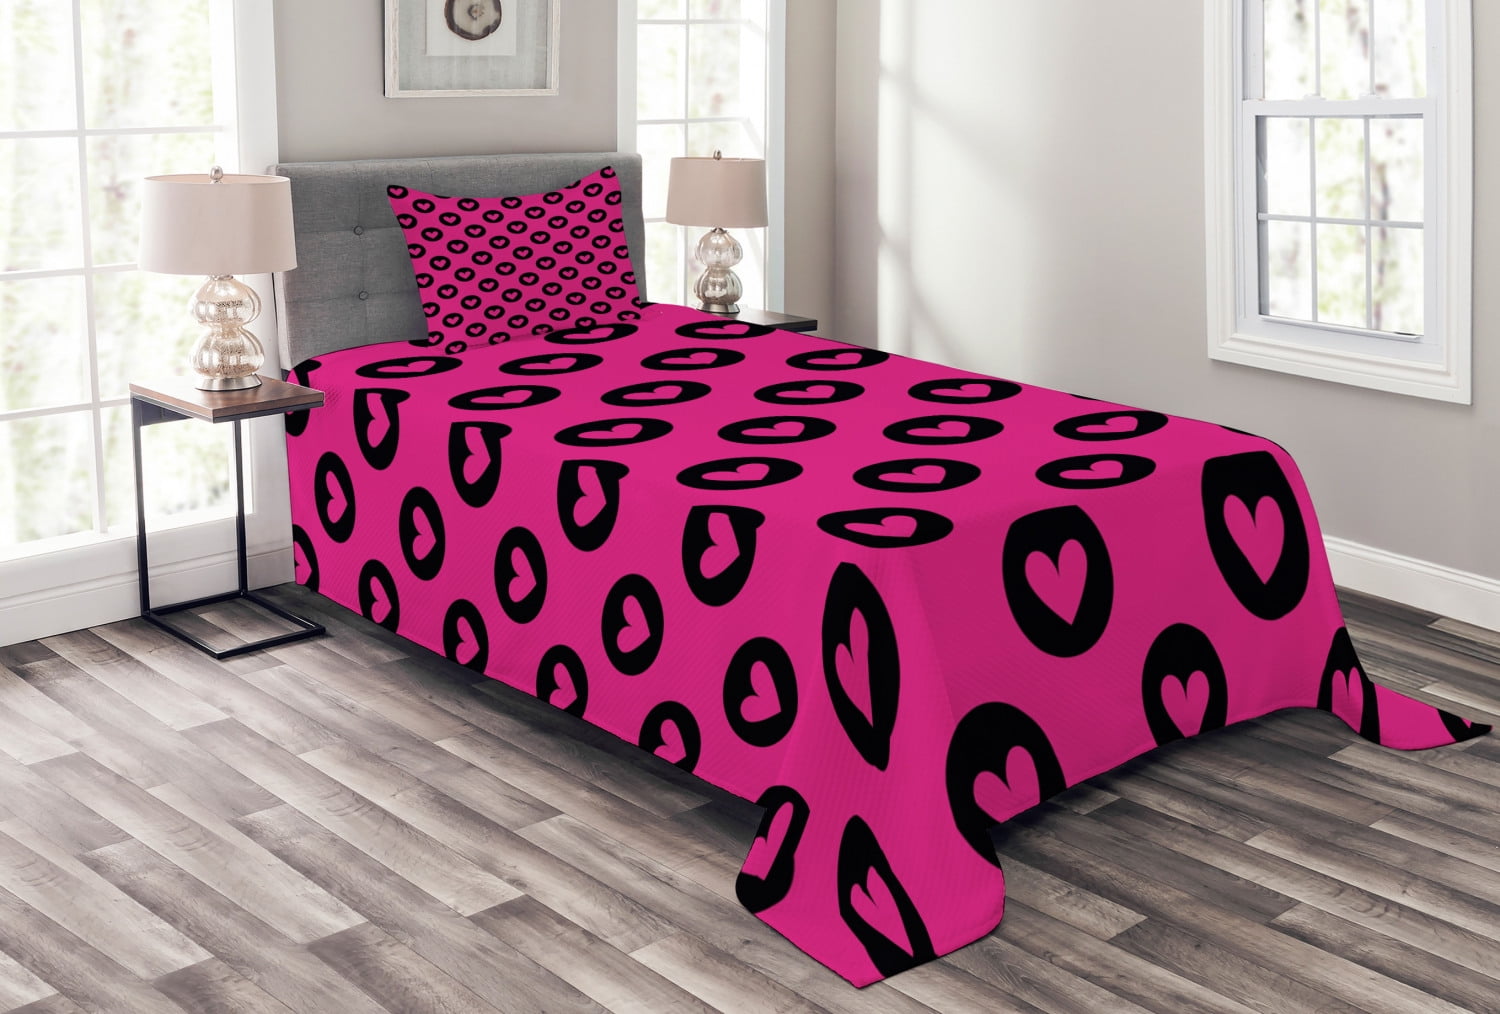 Hot Pink Bedspread Set, Cute Pink Hearts inside Big Black Spots Pattern